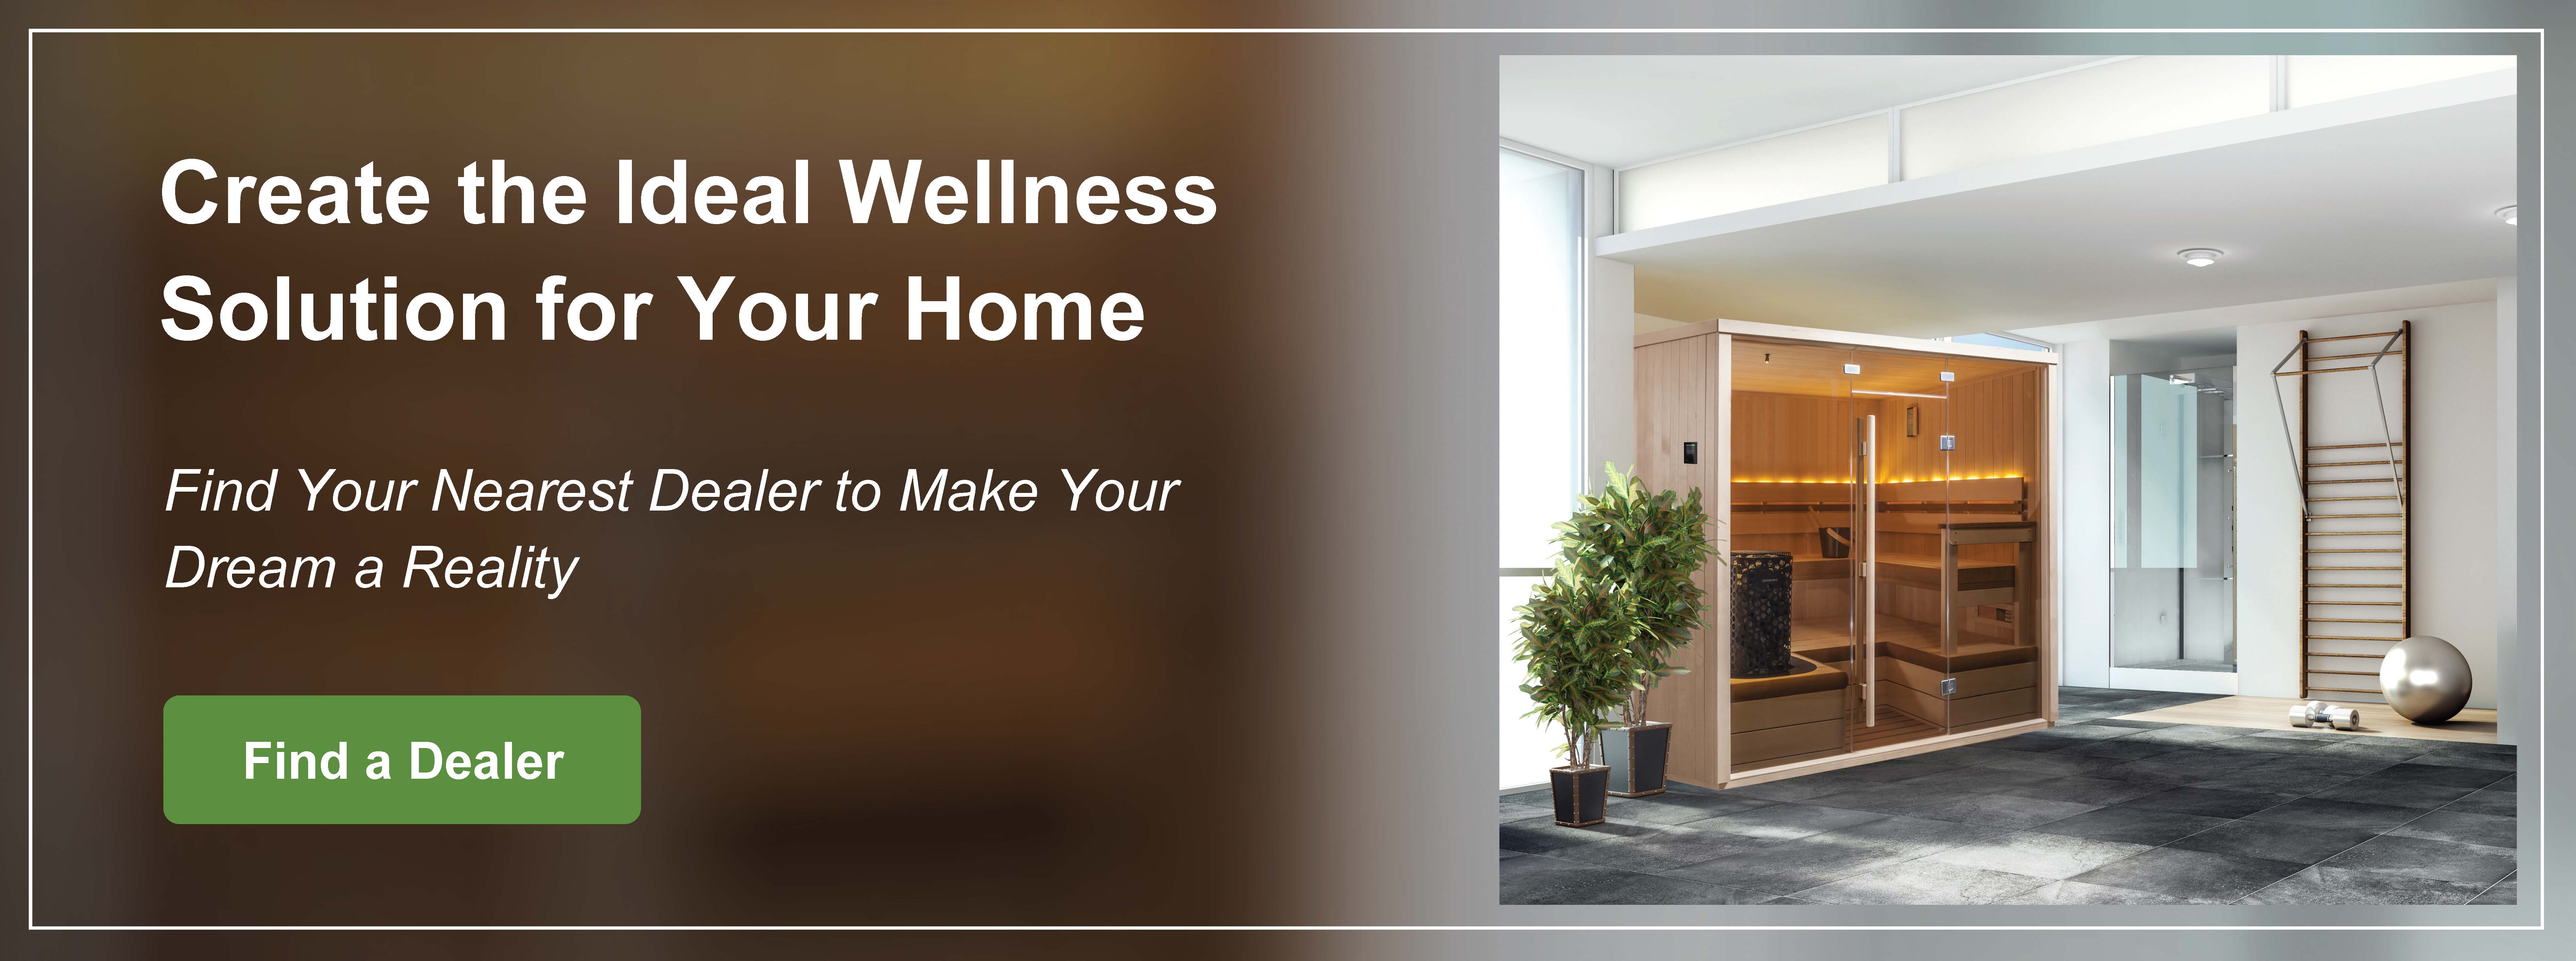 Health Wellness Solutions Banner for Website